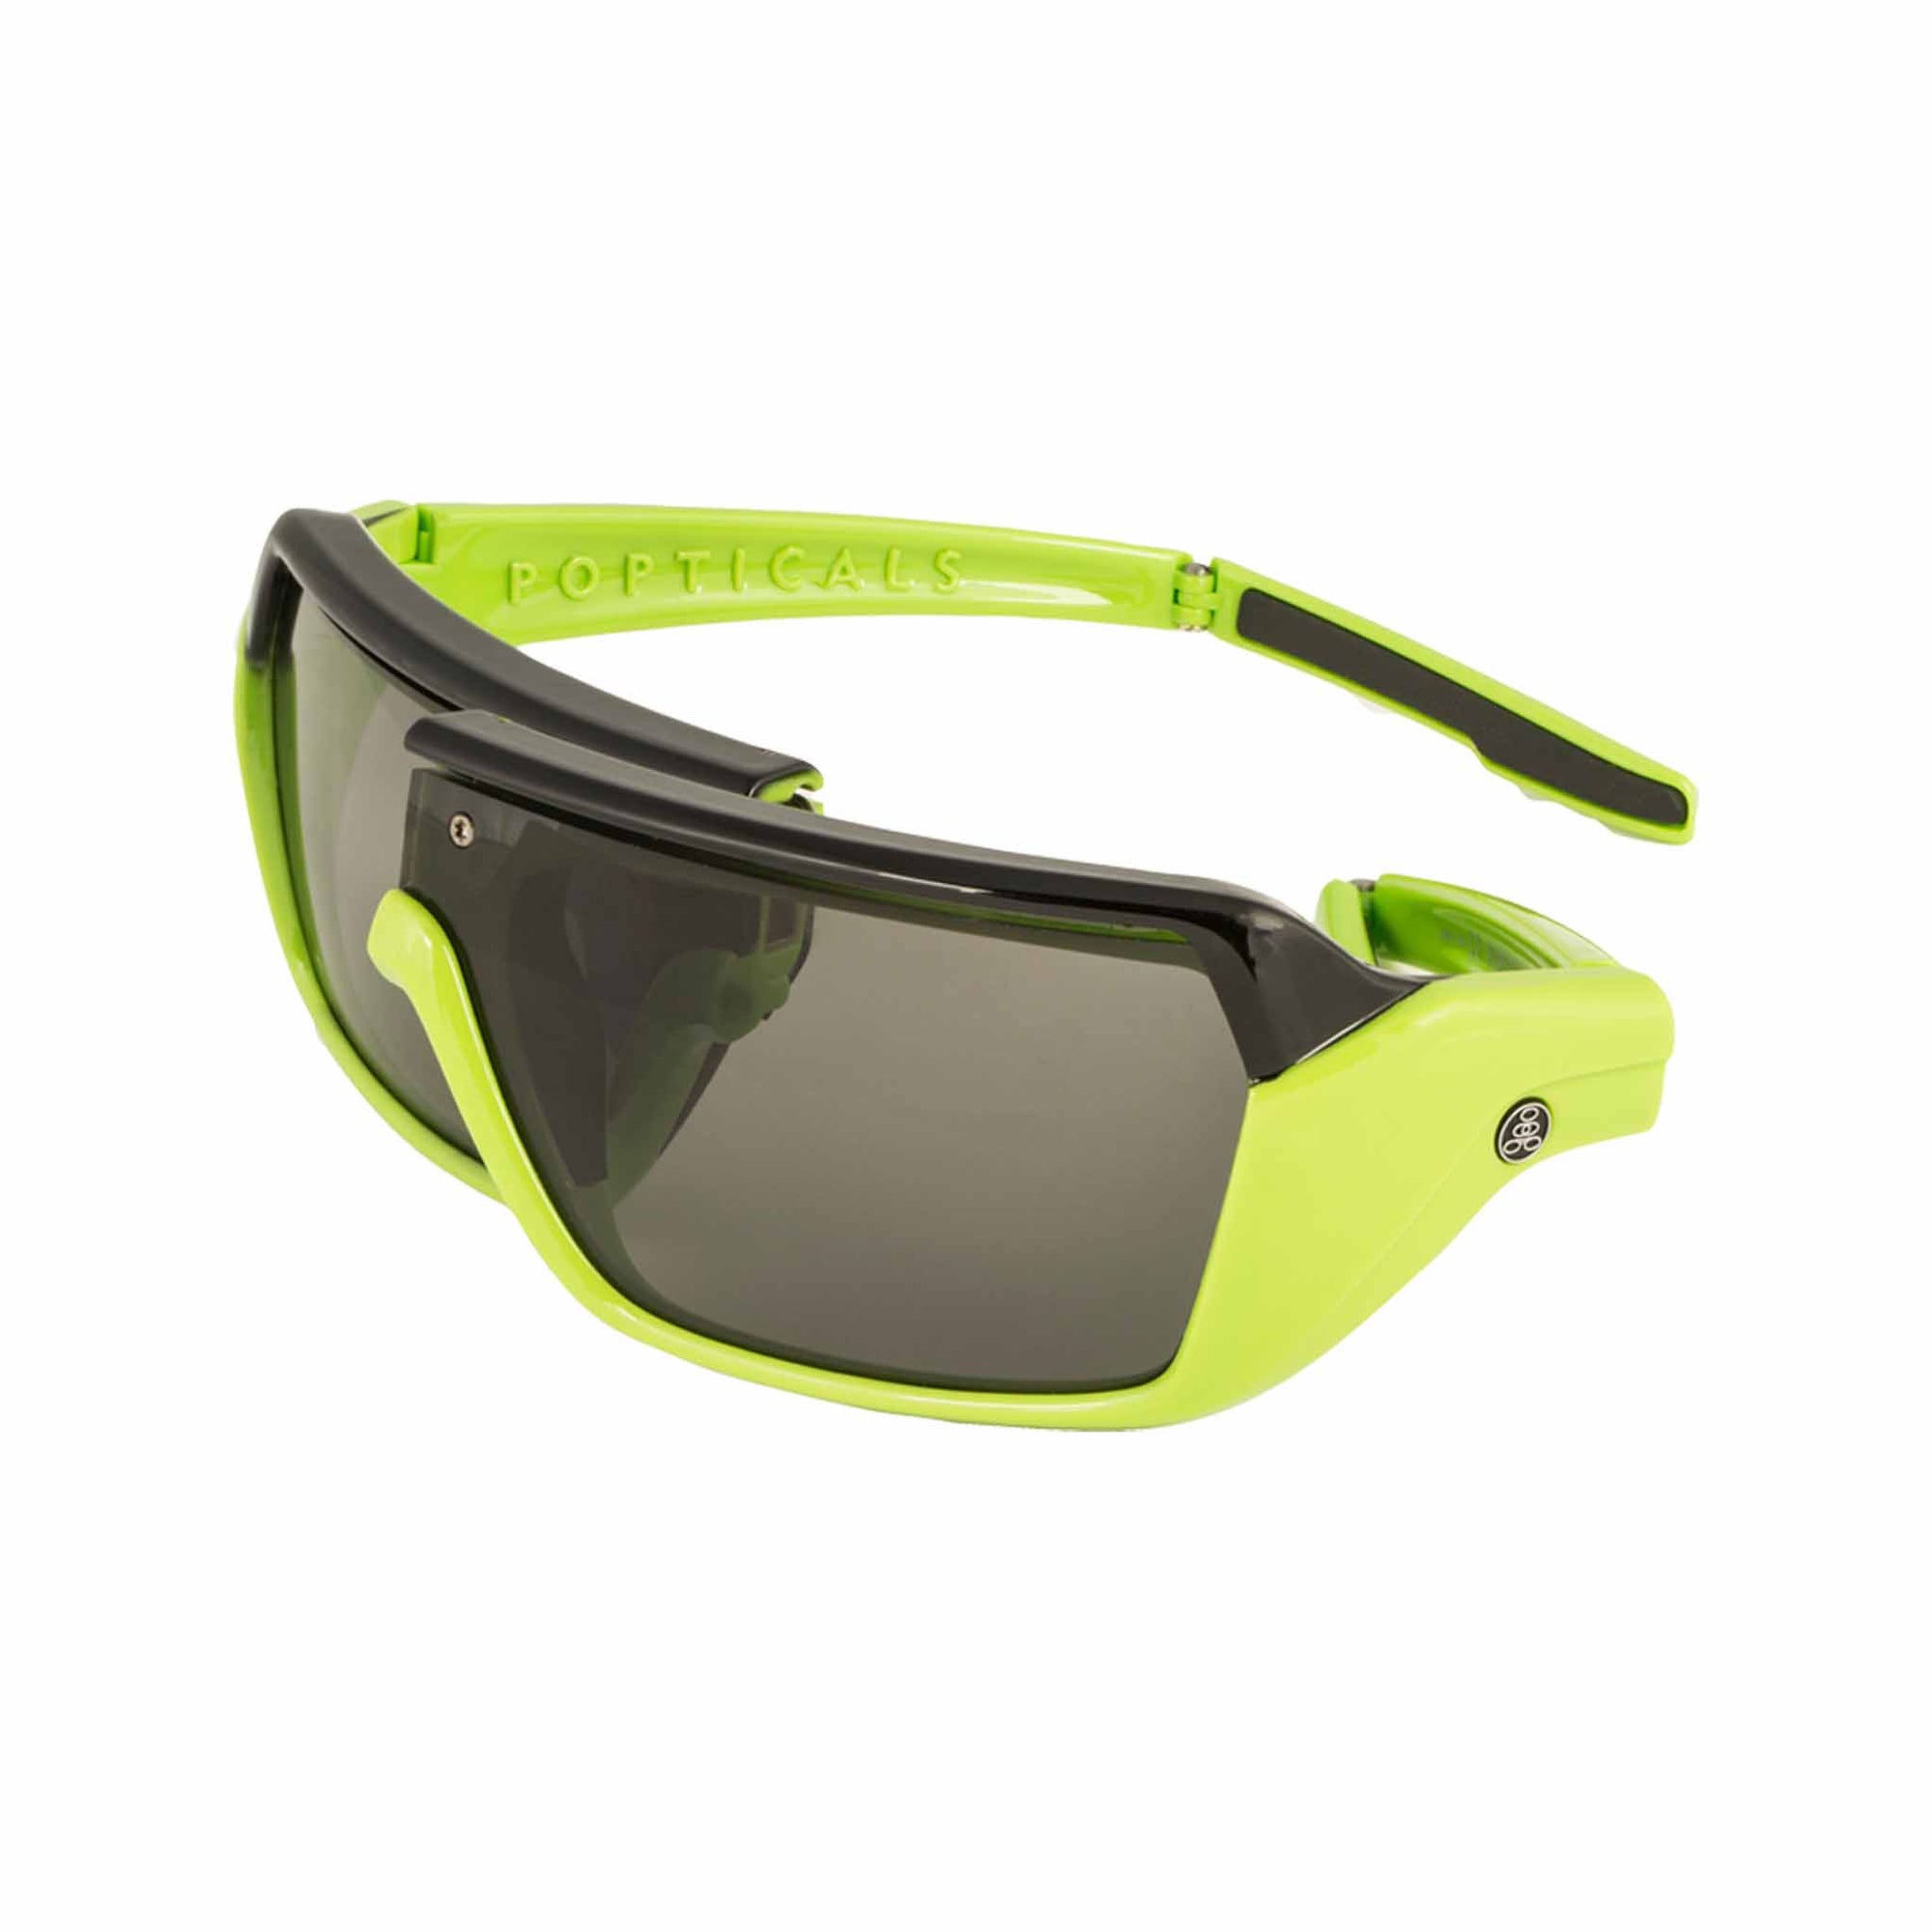 Popticals, Premium Compact Sunglasses, PopStorm, 010060-EBGP, Polarized Sunglasses, Gloss Black/Green Frame, Gray Lenses, Spider View